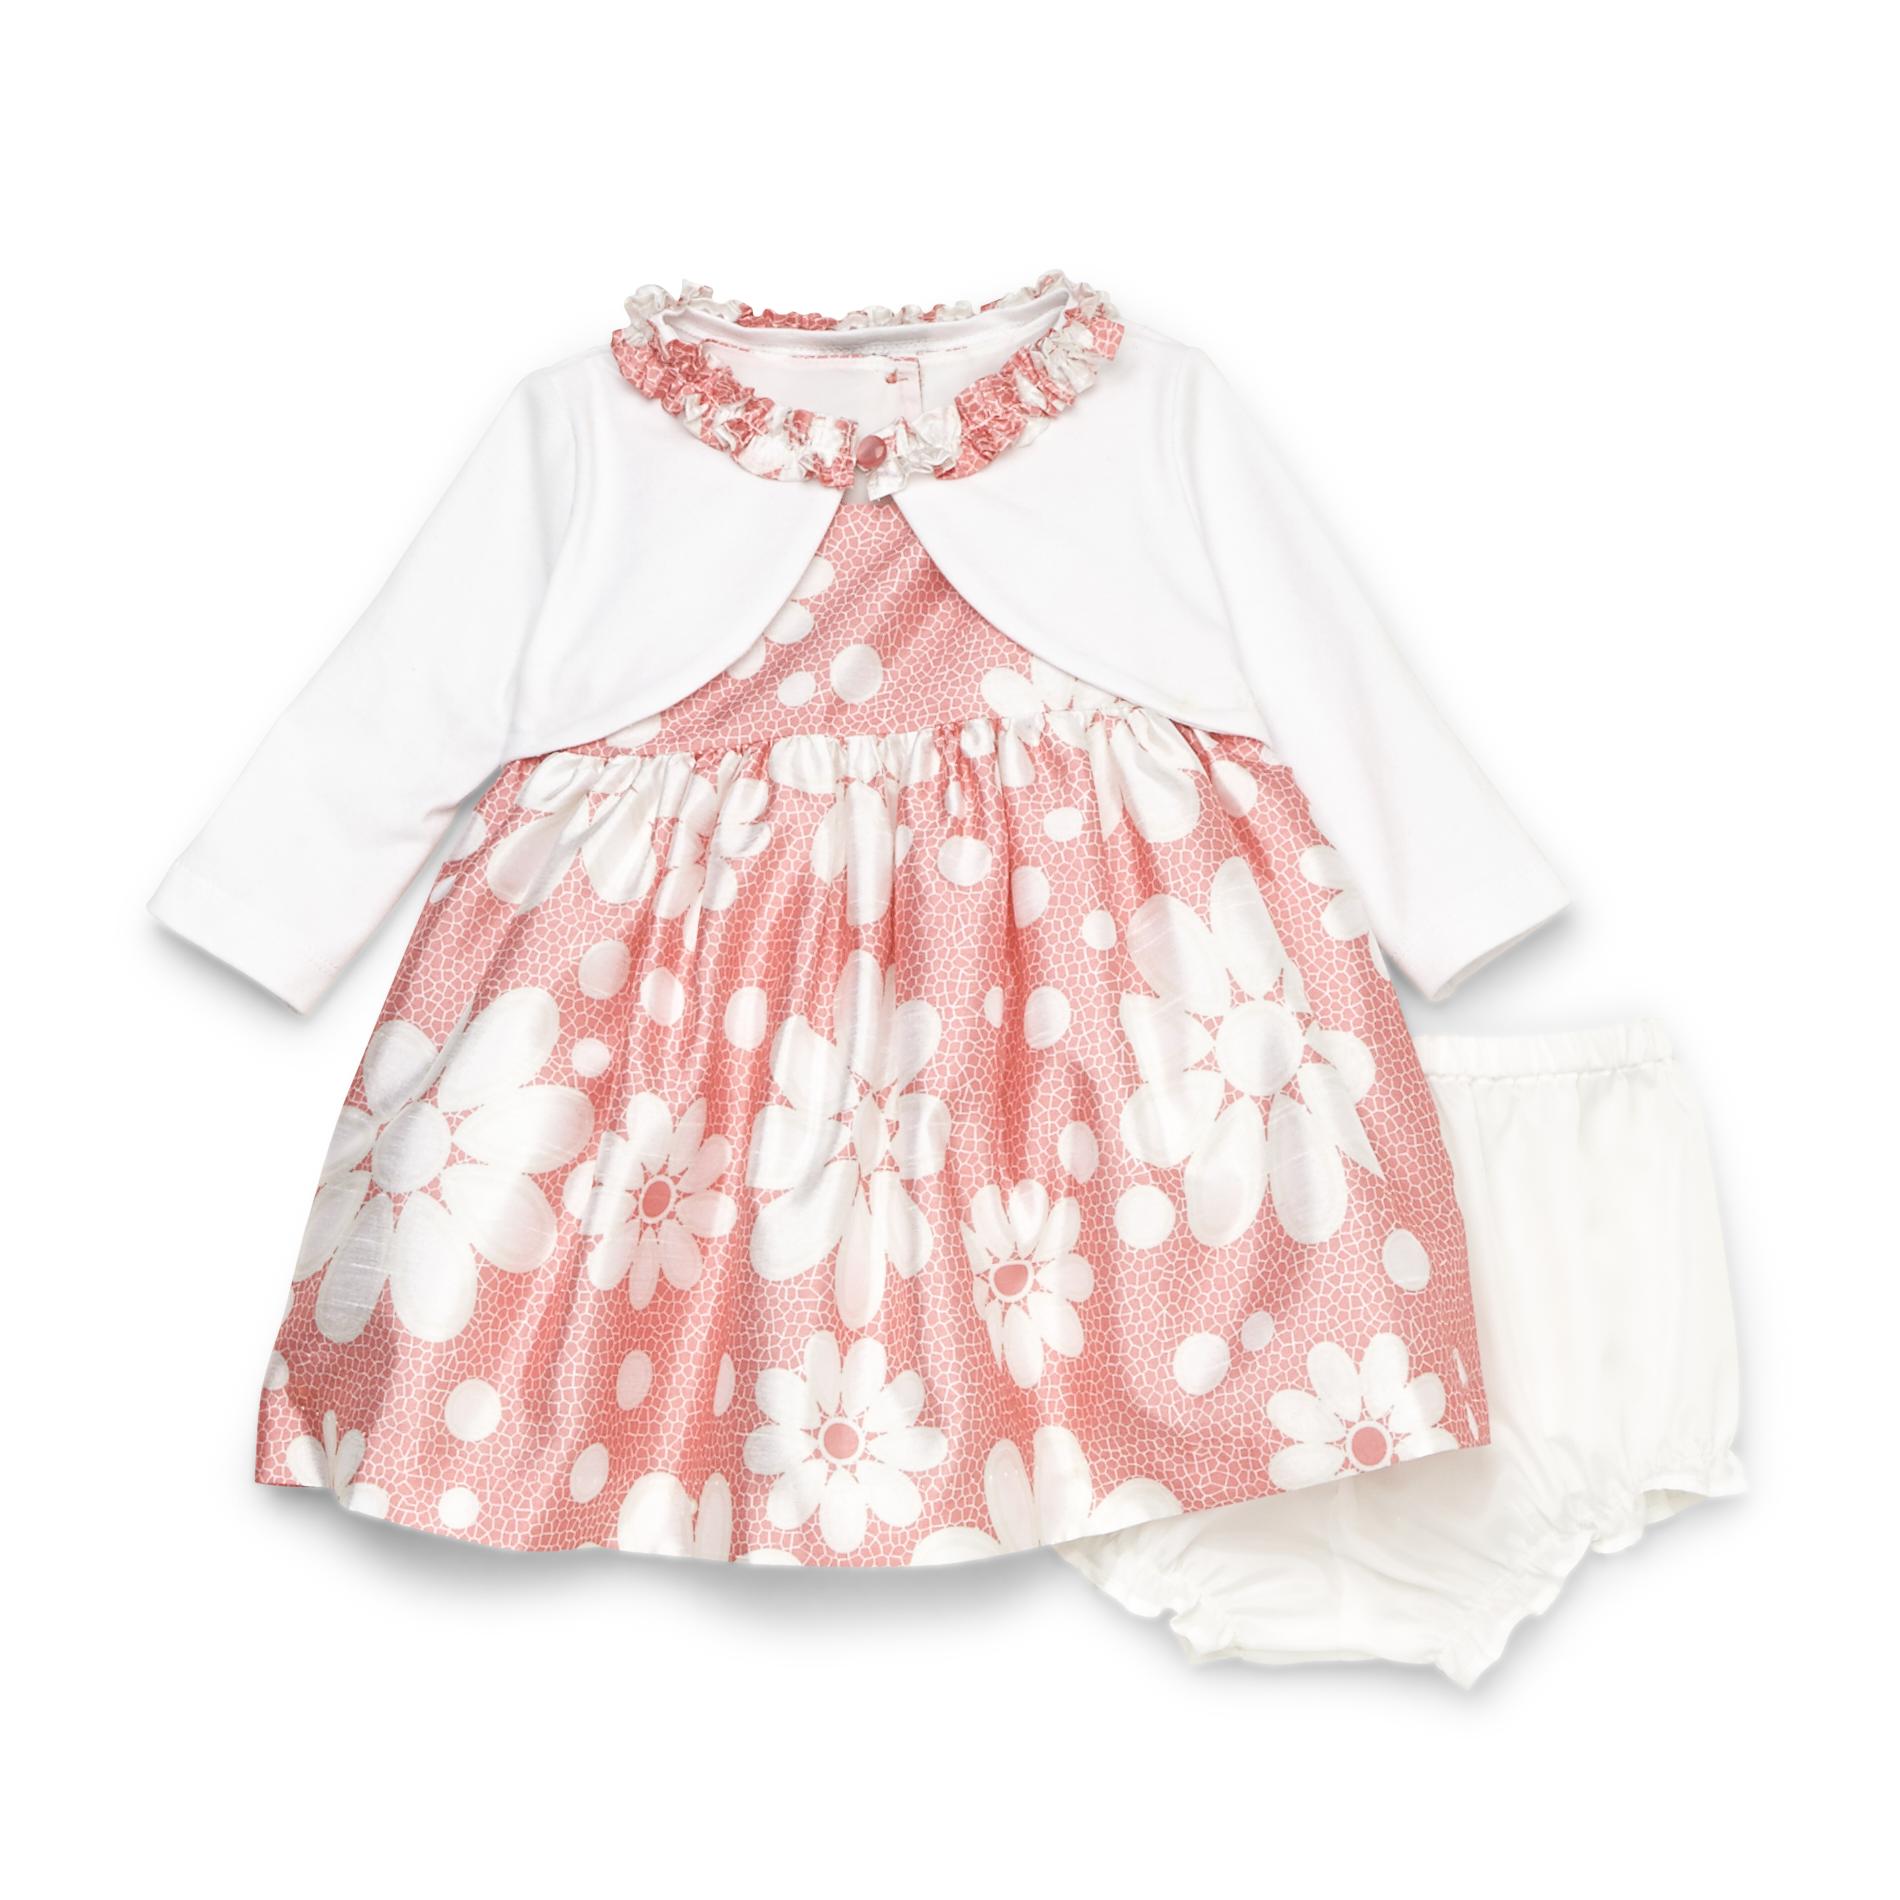 Holiday Editions Newborn Girl's Dress  Shrug & Diaper Cover - Daisy & Polka Dot